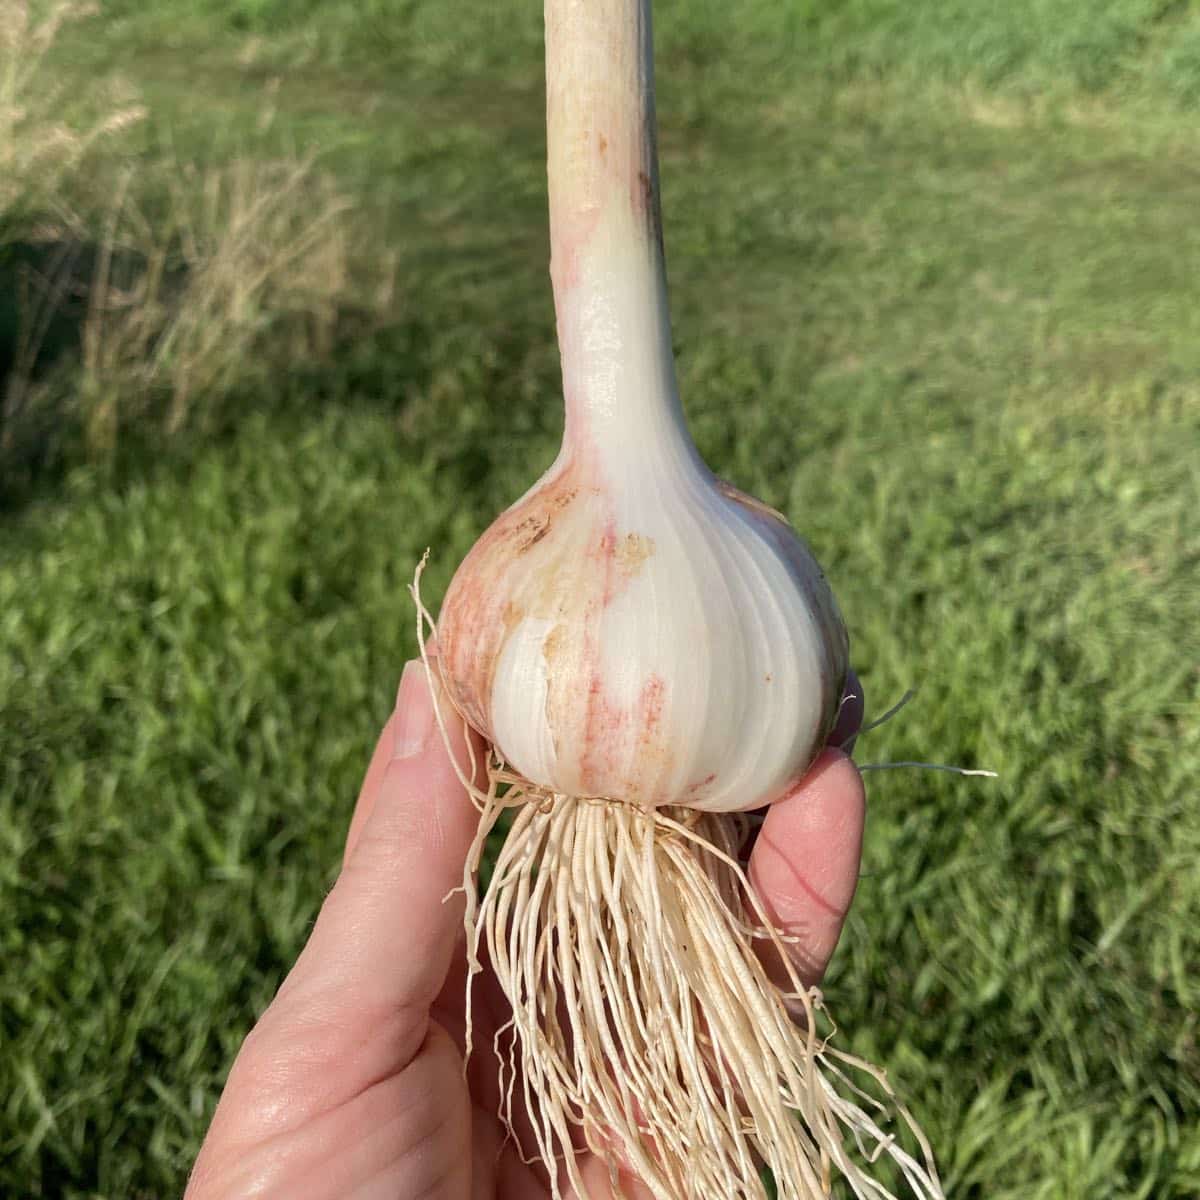 https://www.tipiproduce.com/wp-content/uploads/2022/07/IMG_5955-fresh-garlicSQ.jpg